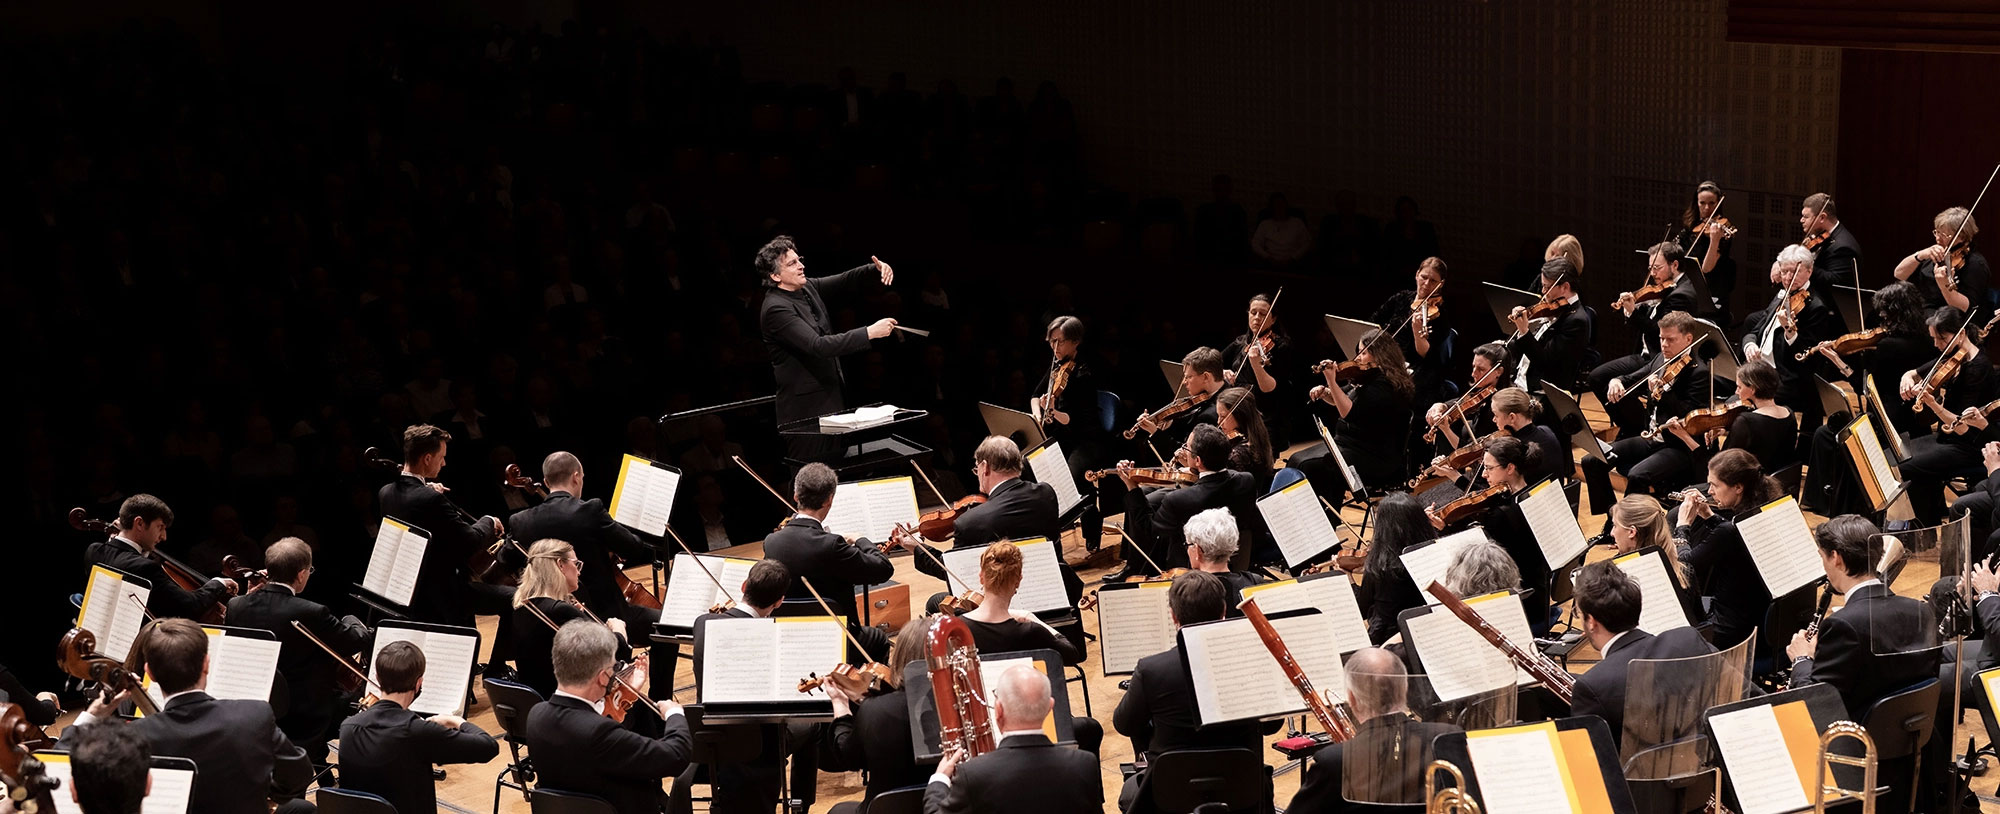 Michael Sanderling | Conductor | Dates